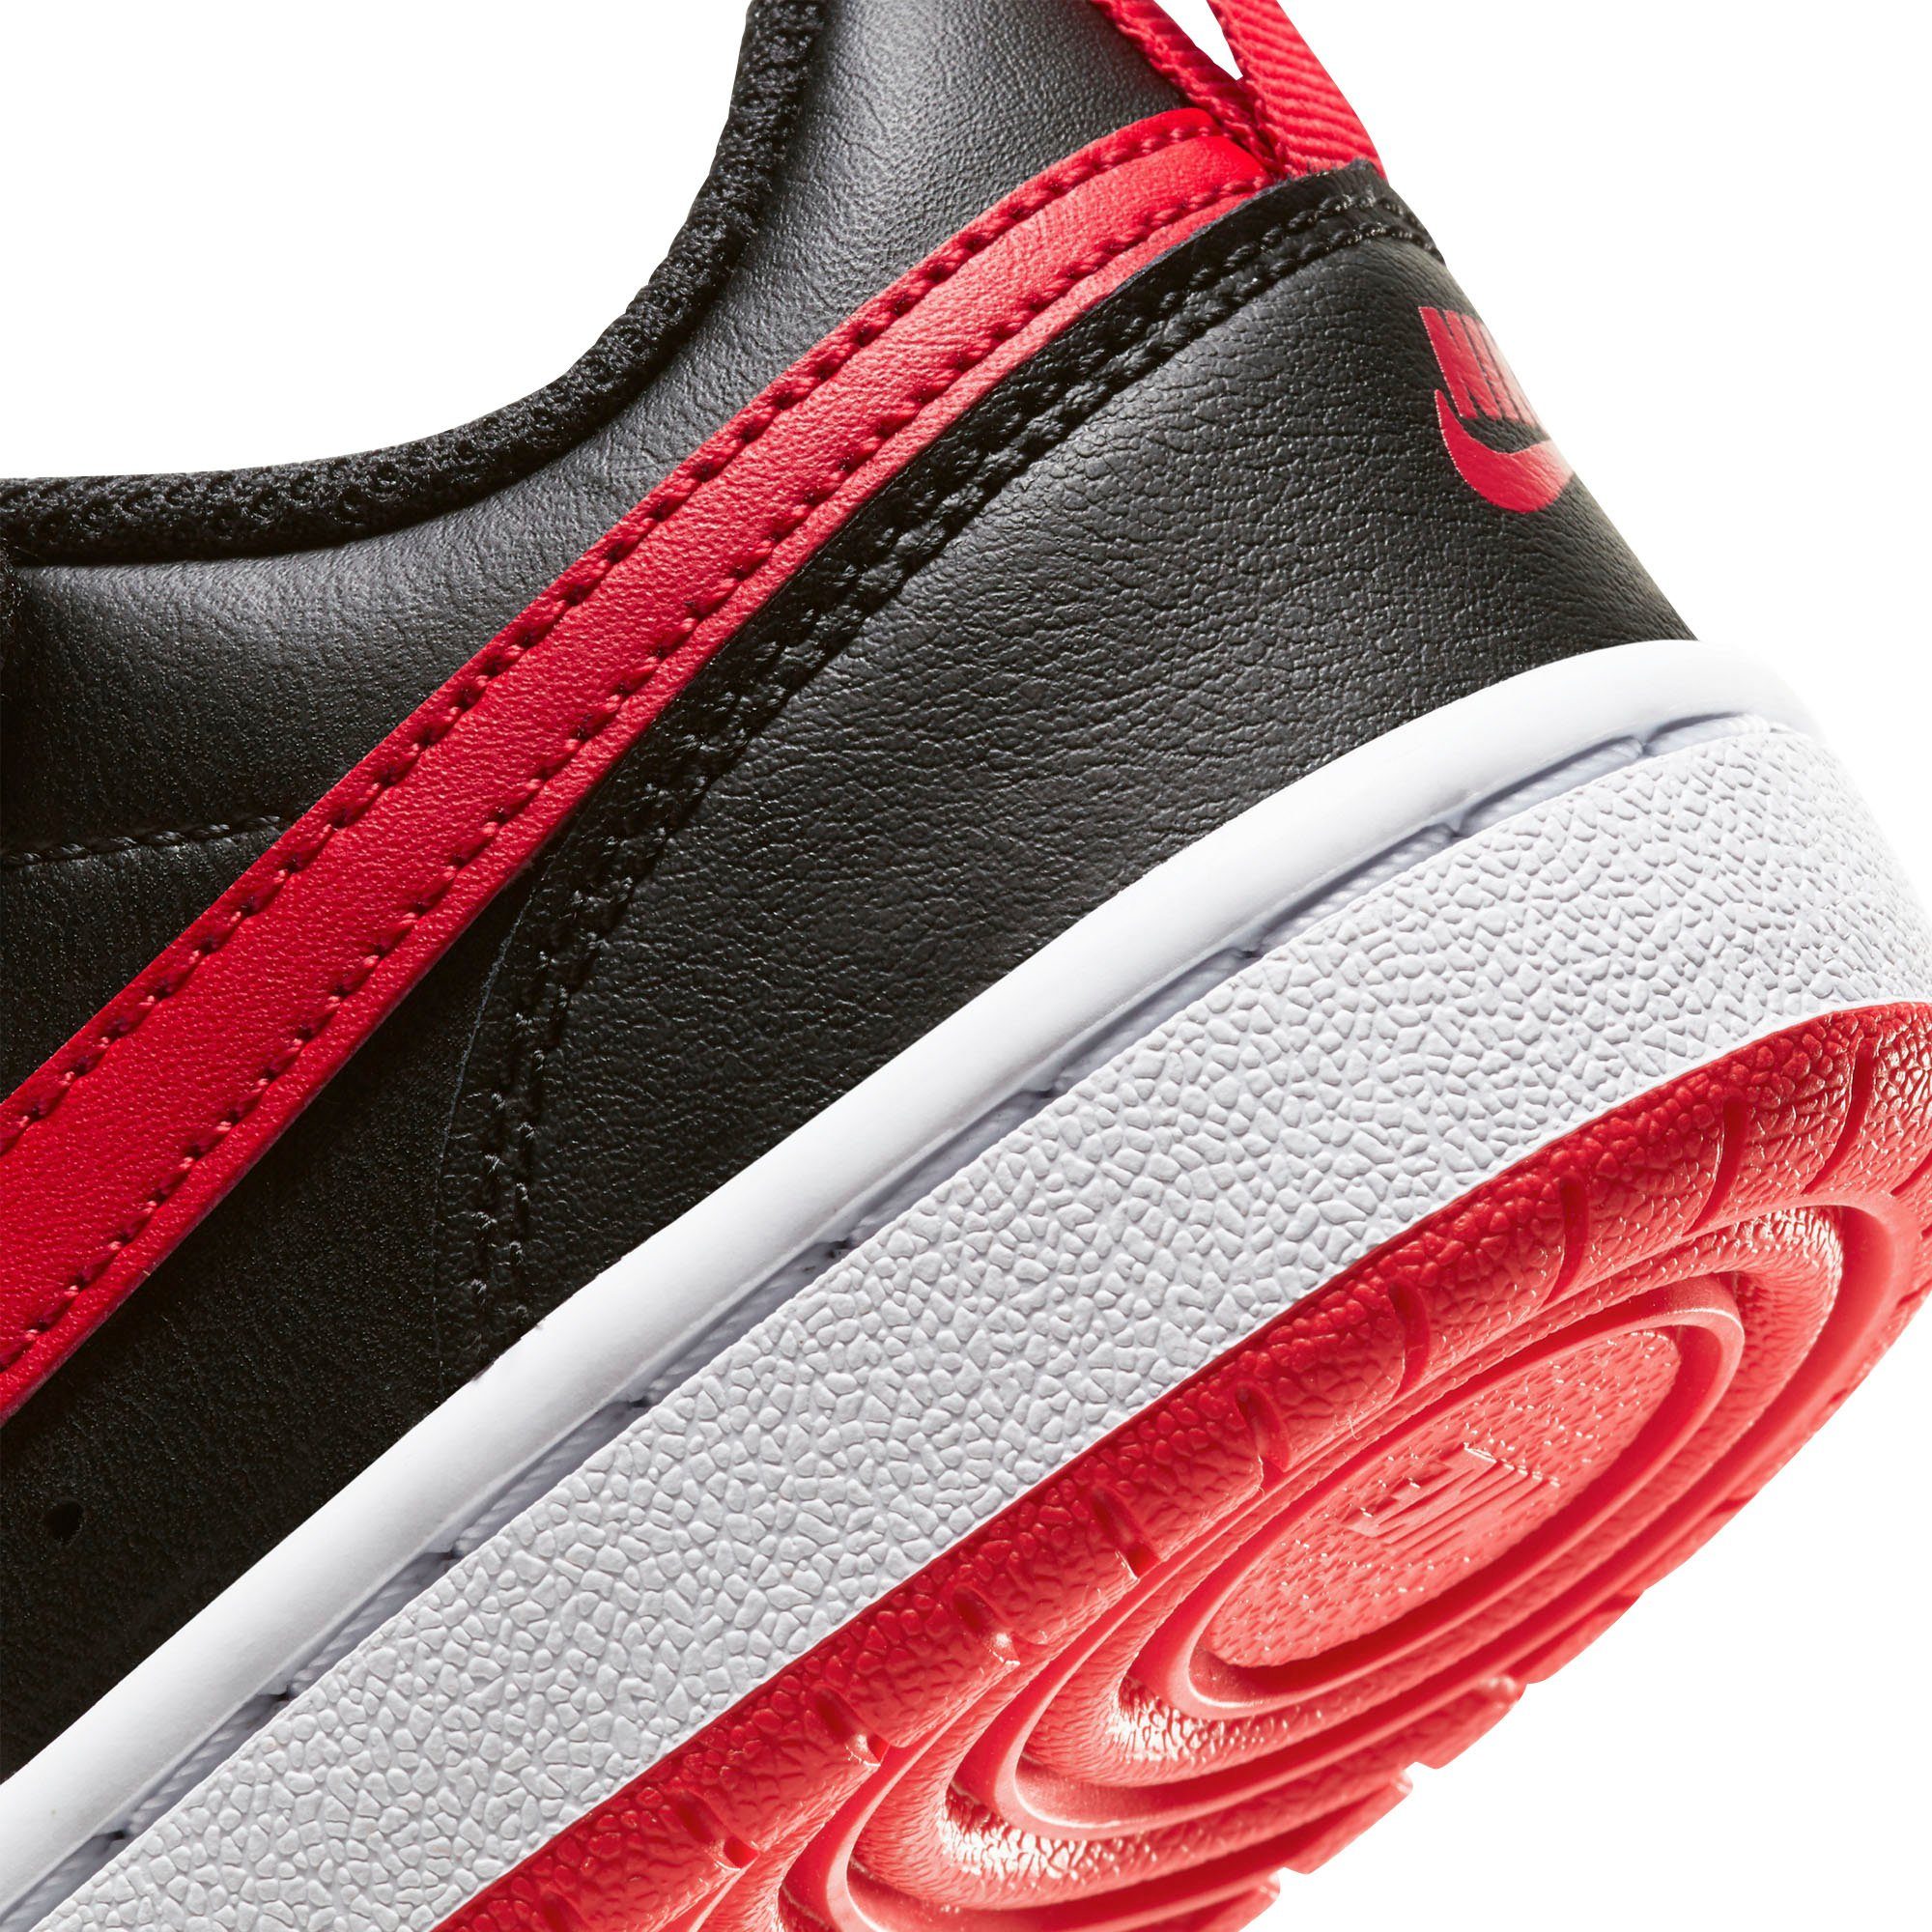 Force Sportswear 1 Spuren Design auf Borough Low Court Nike Air 2 Sneaker des den